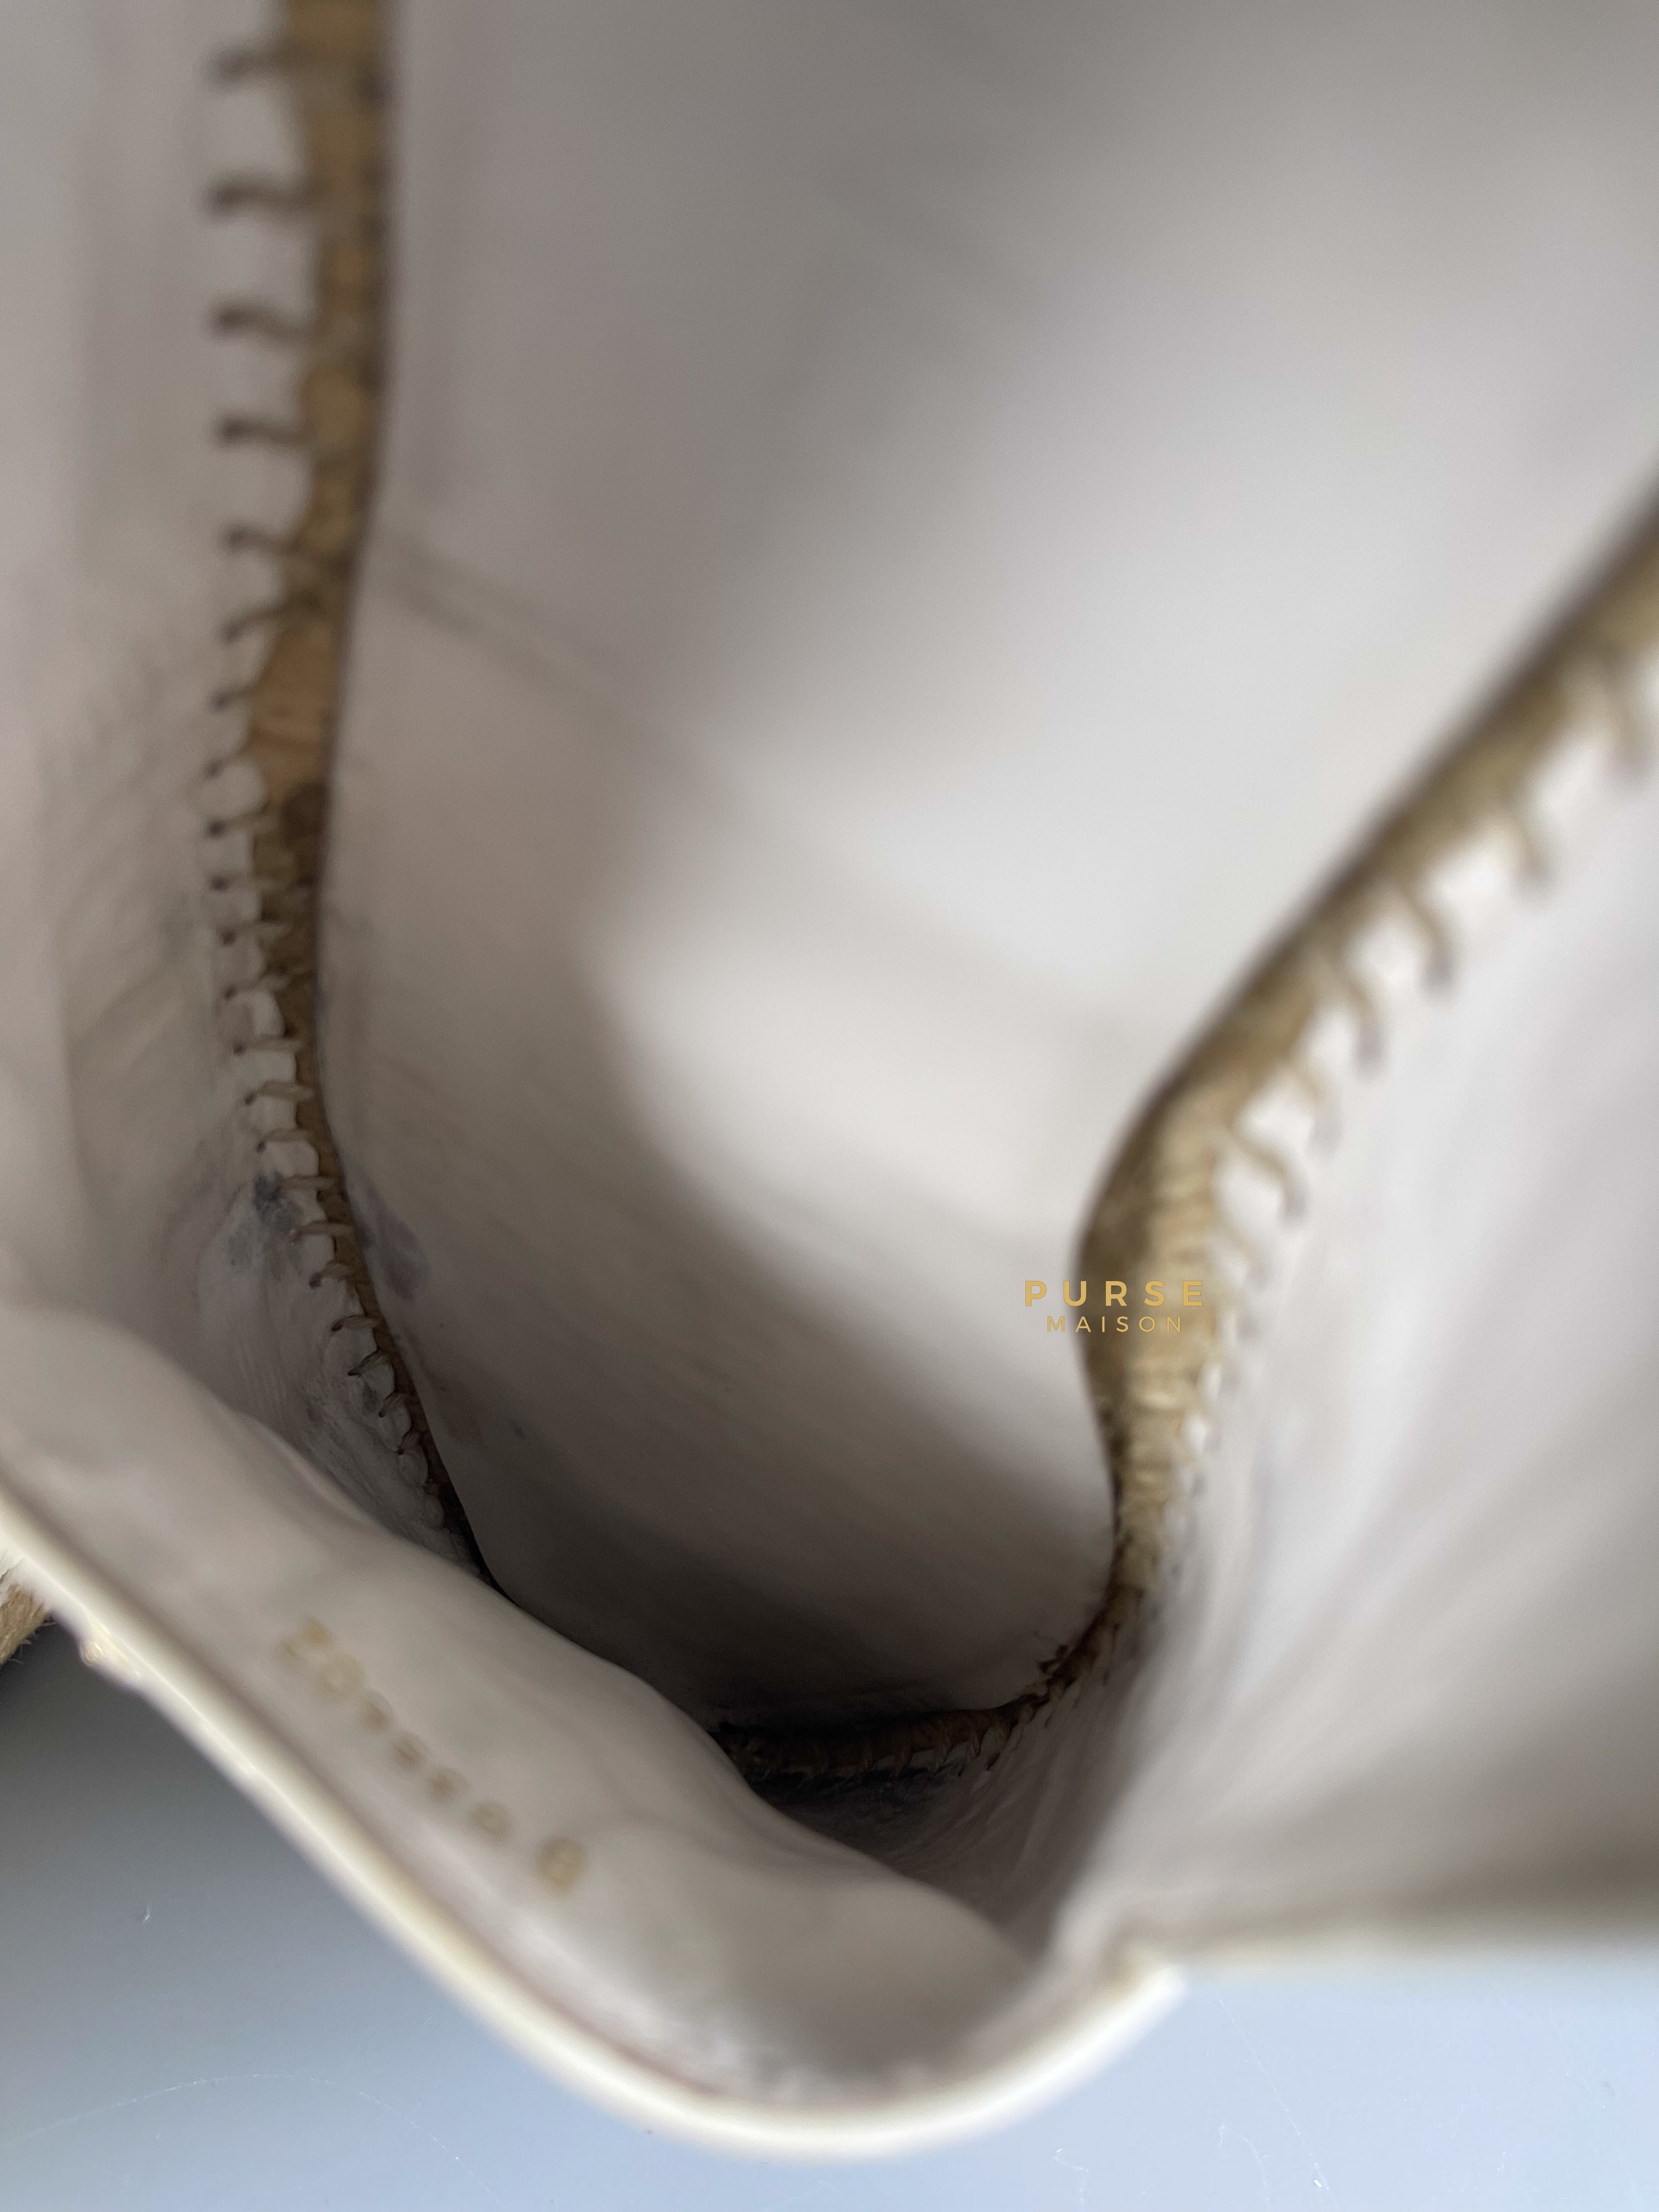 Chanel Espadrilles White Lambskin with Swarovski (Limited Ed) Size 38 EU (24cm) | Purse Maison Luxury Bags Shop